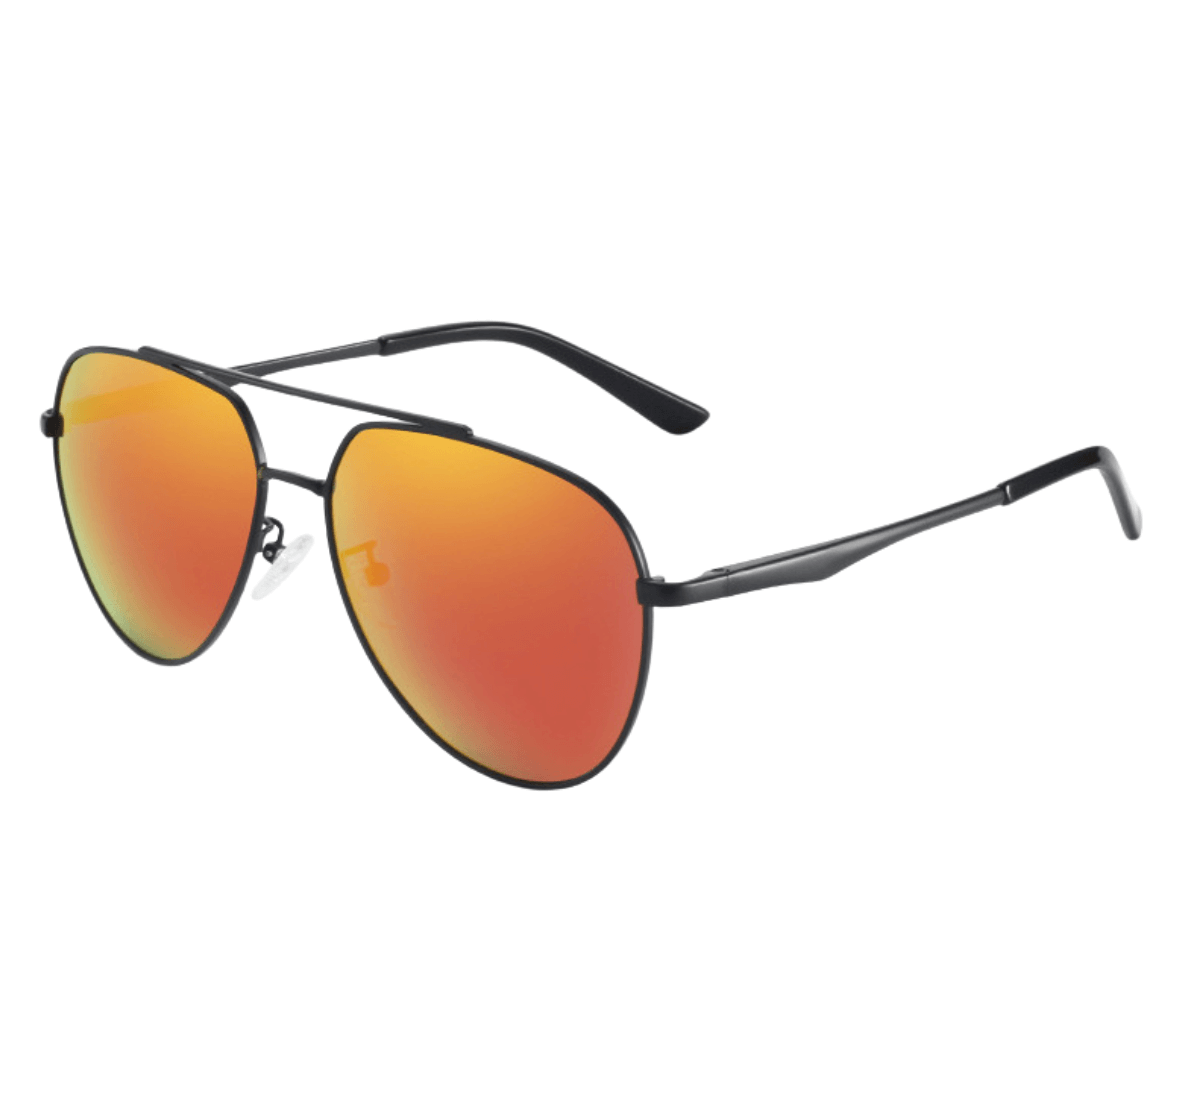 Wholesale Aviator Sunglasses, aviator sunglasses womens, womens large aviator sunglasses, ladies black aviator sunglasses, aviator sunglasses cheap bulk, wholesale eyewear suppliers